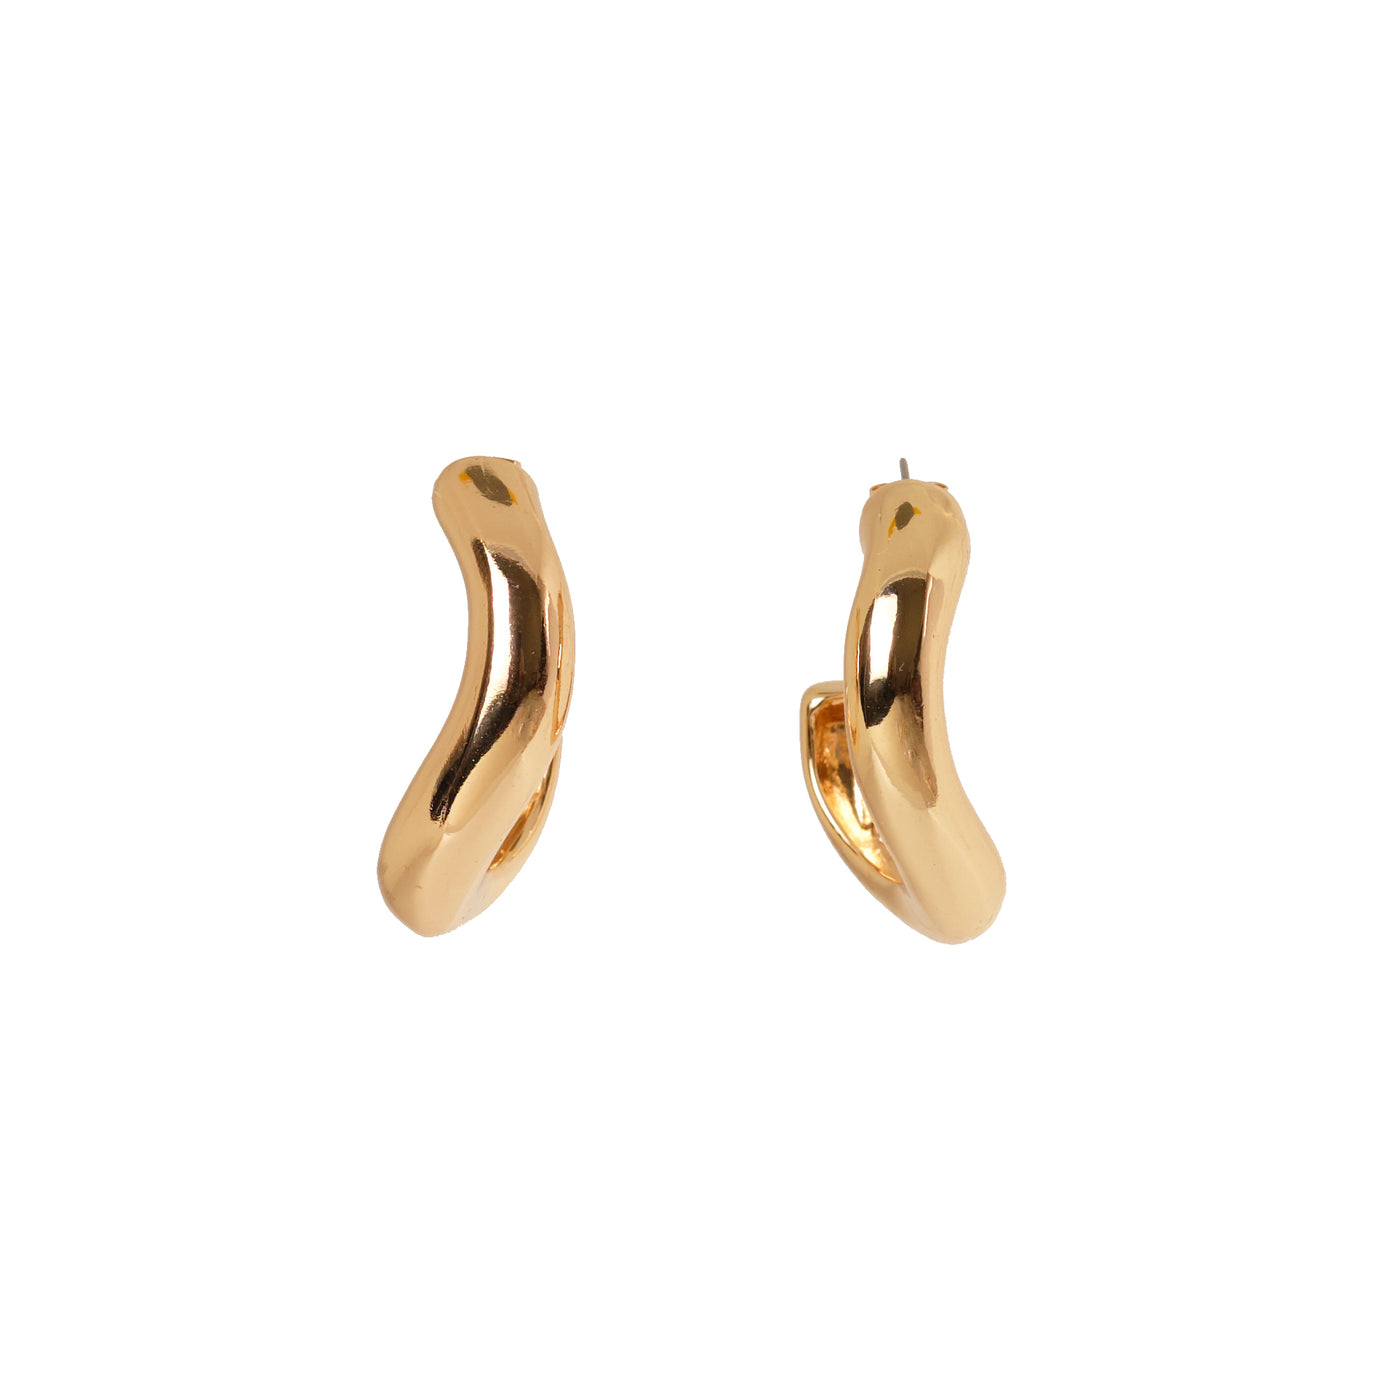 Valentina Hoop Earrings, Polished Gold